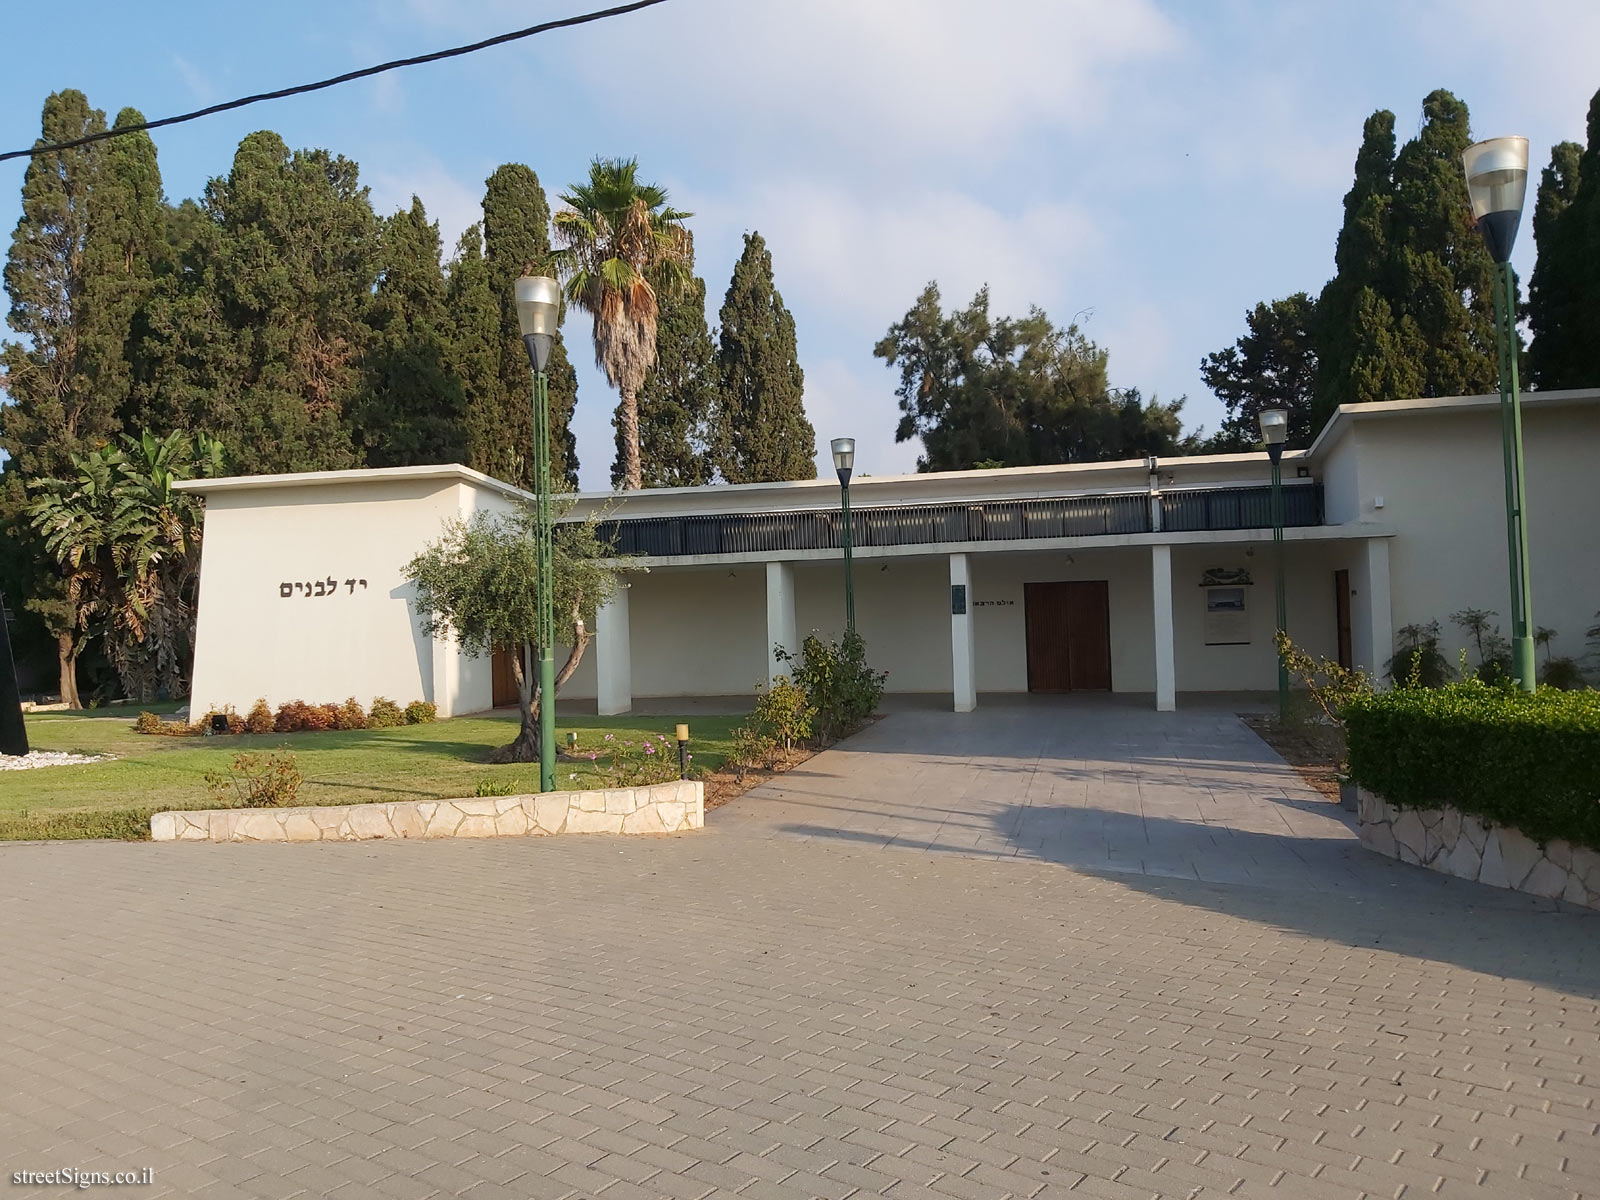 Kfar Vitkin - Yad Labanim House - Derech HaKfar 125, Kfar Vitkin, Israel